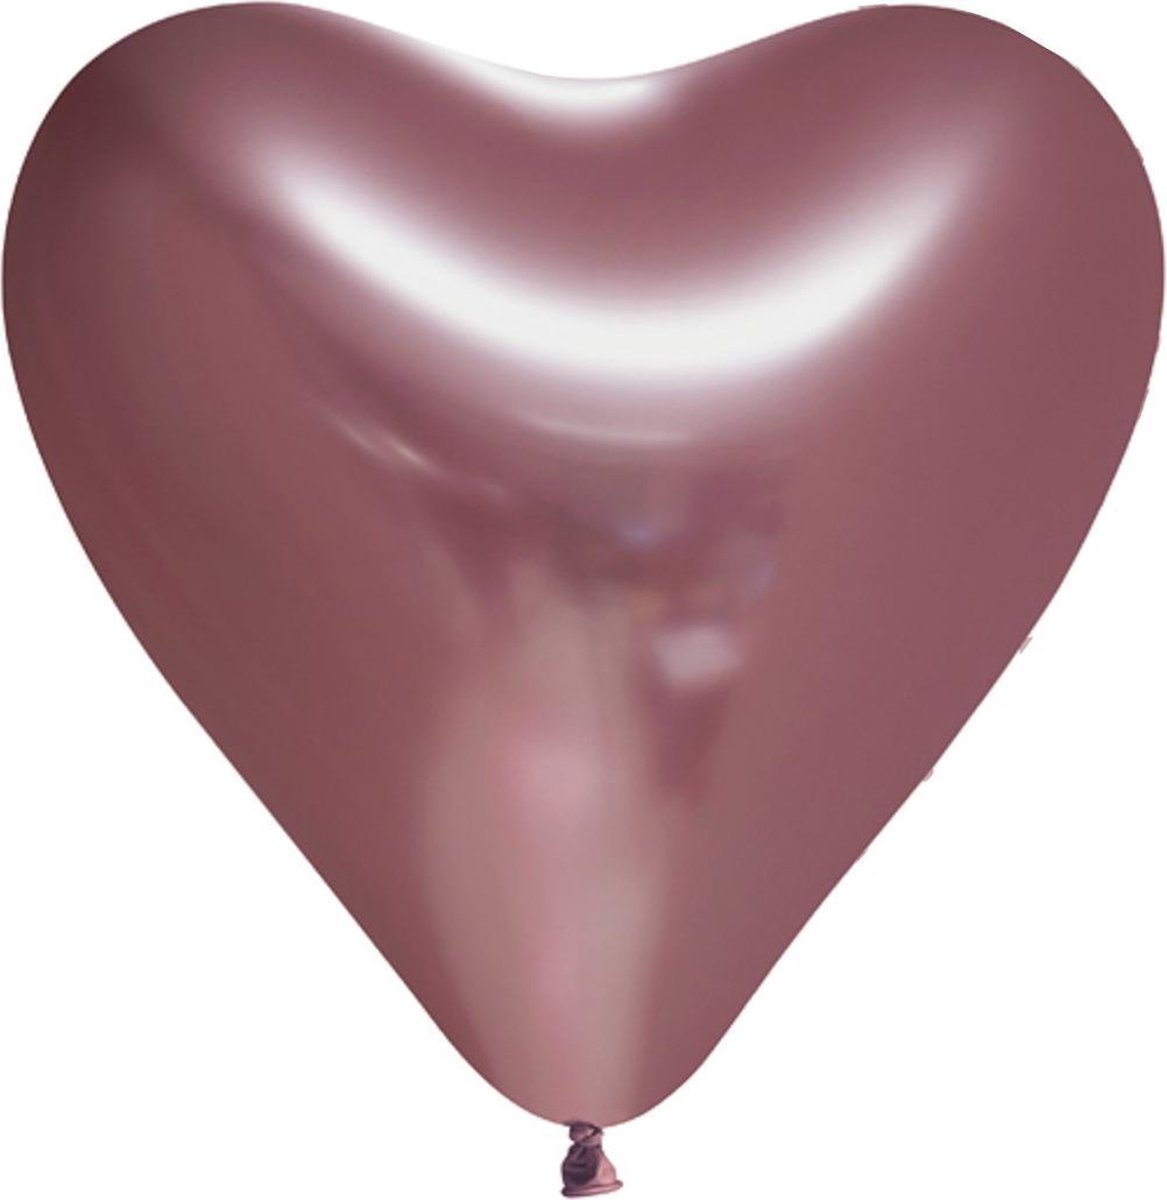 Globos Ballon Hart Spiegelend 30 Cm Latex Roségoud 6 Stuks